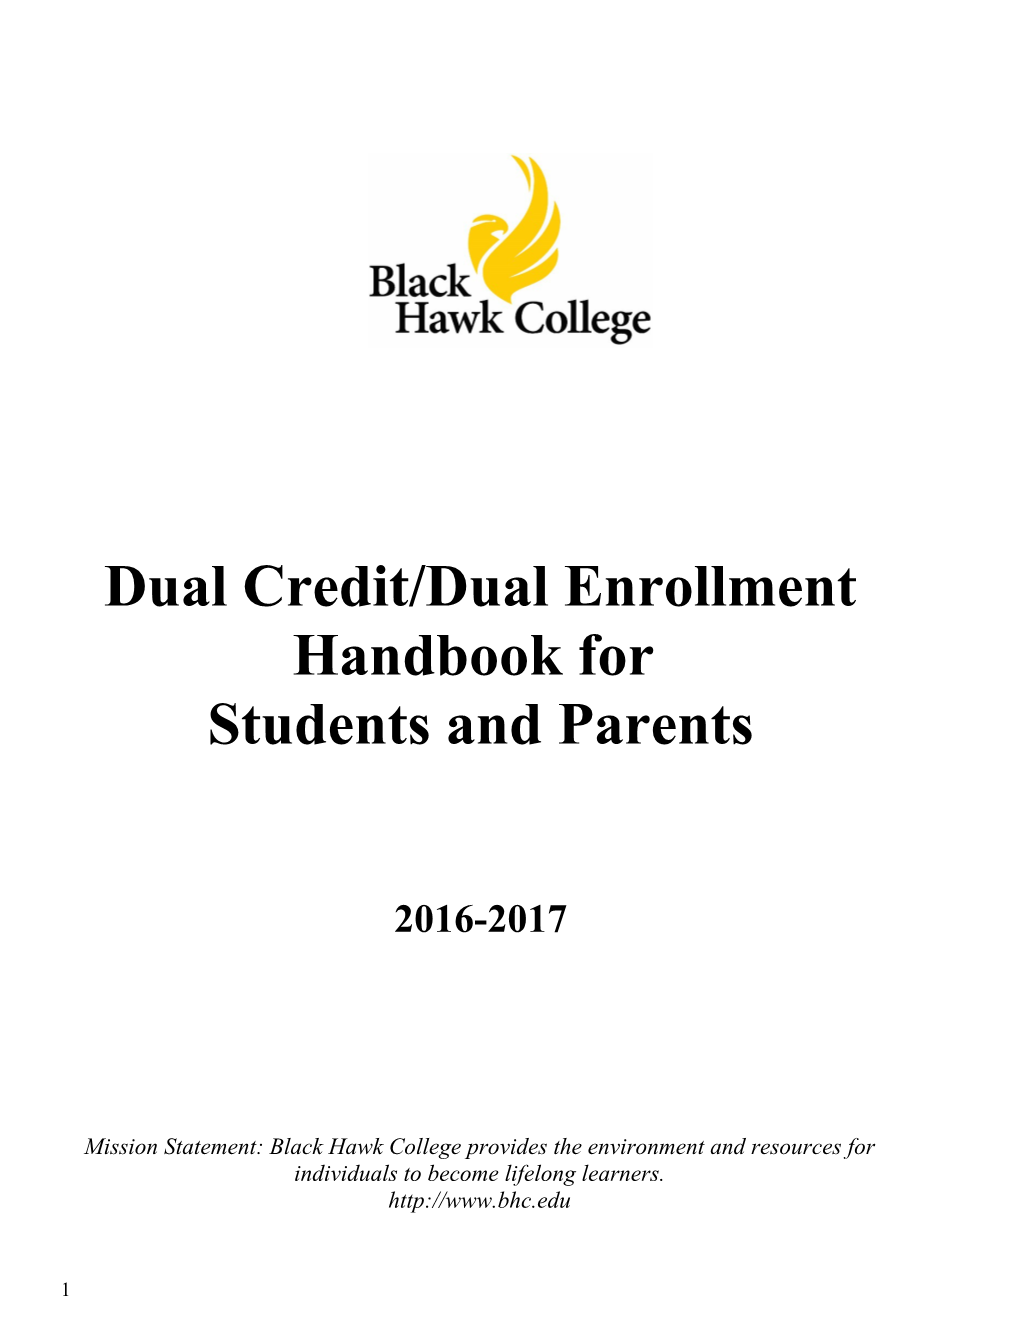 Dual Credit/Dual Enrollment Handbook For